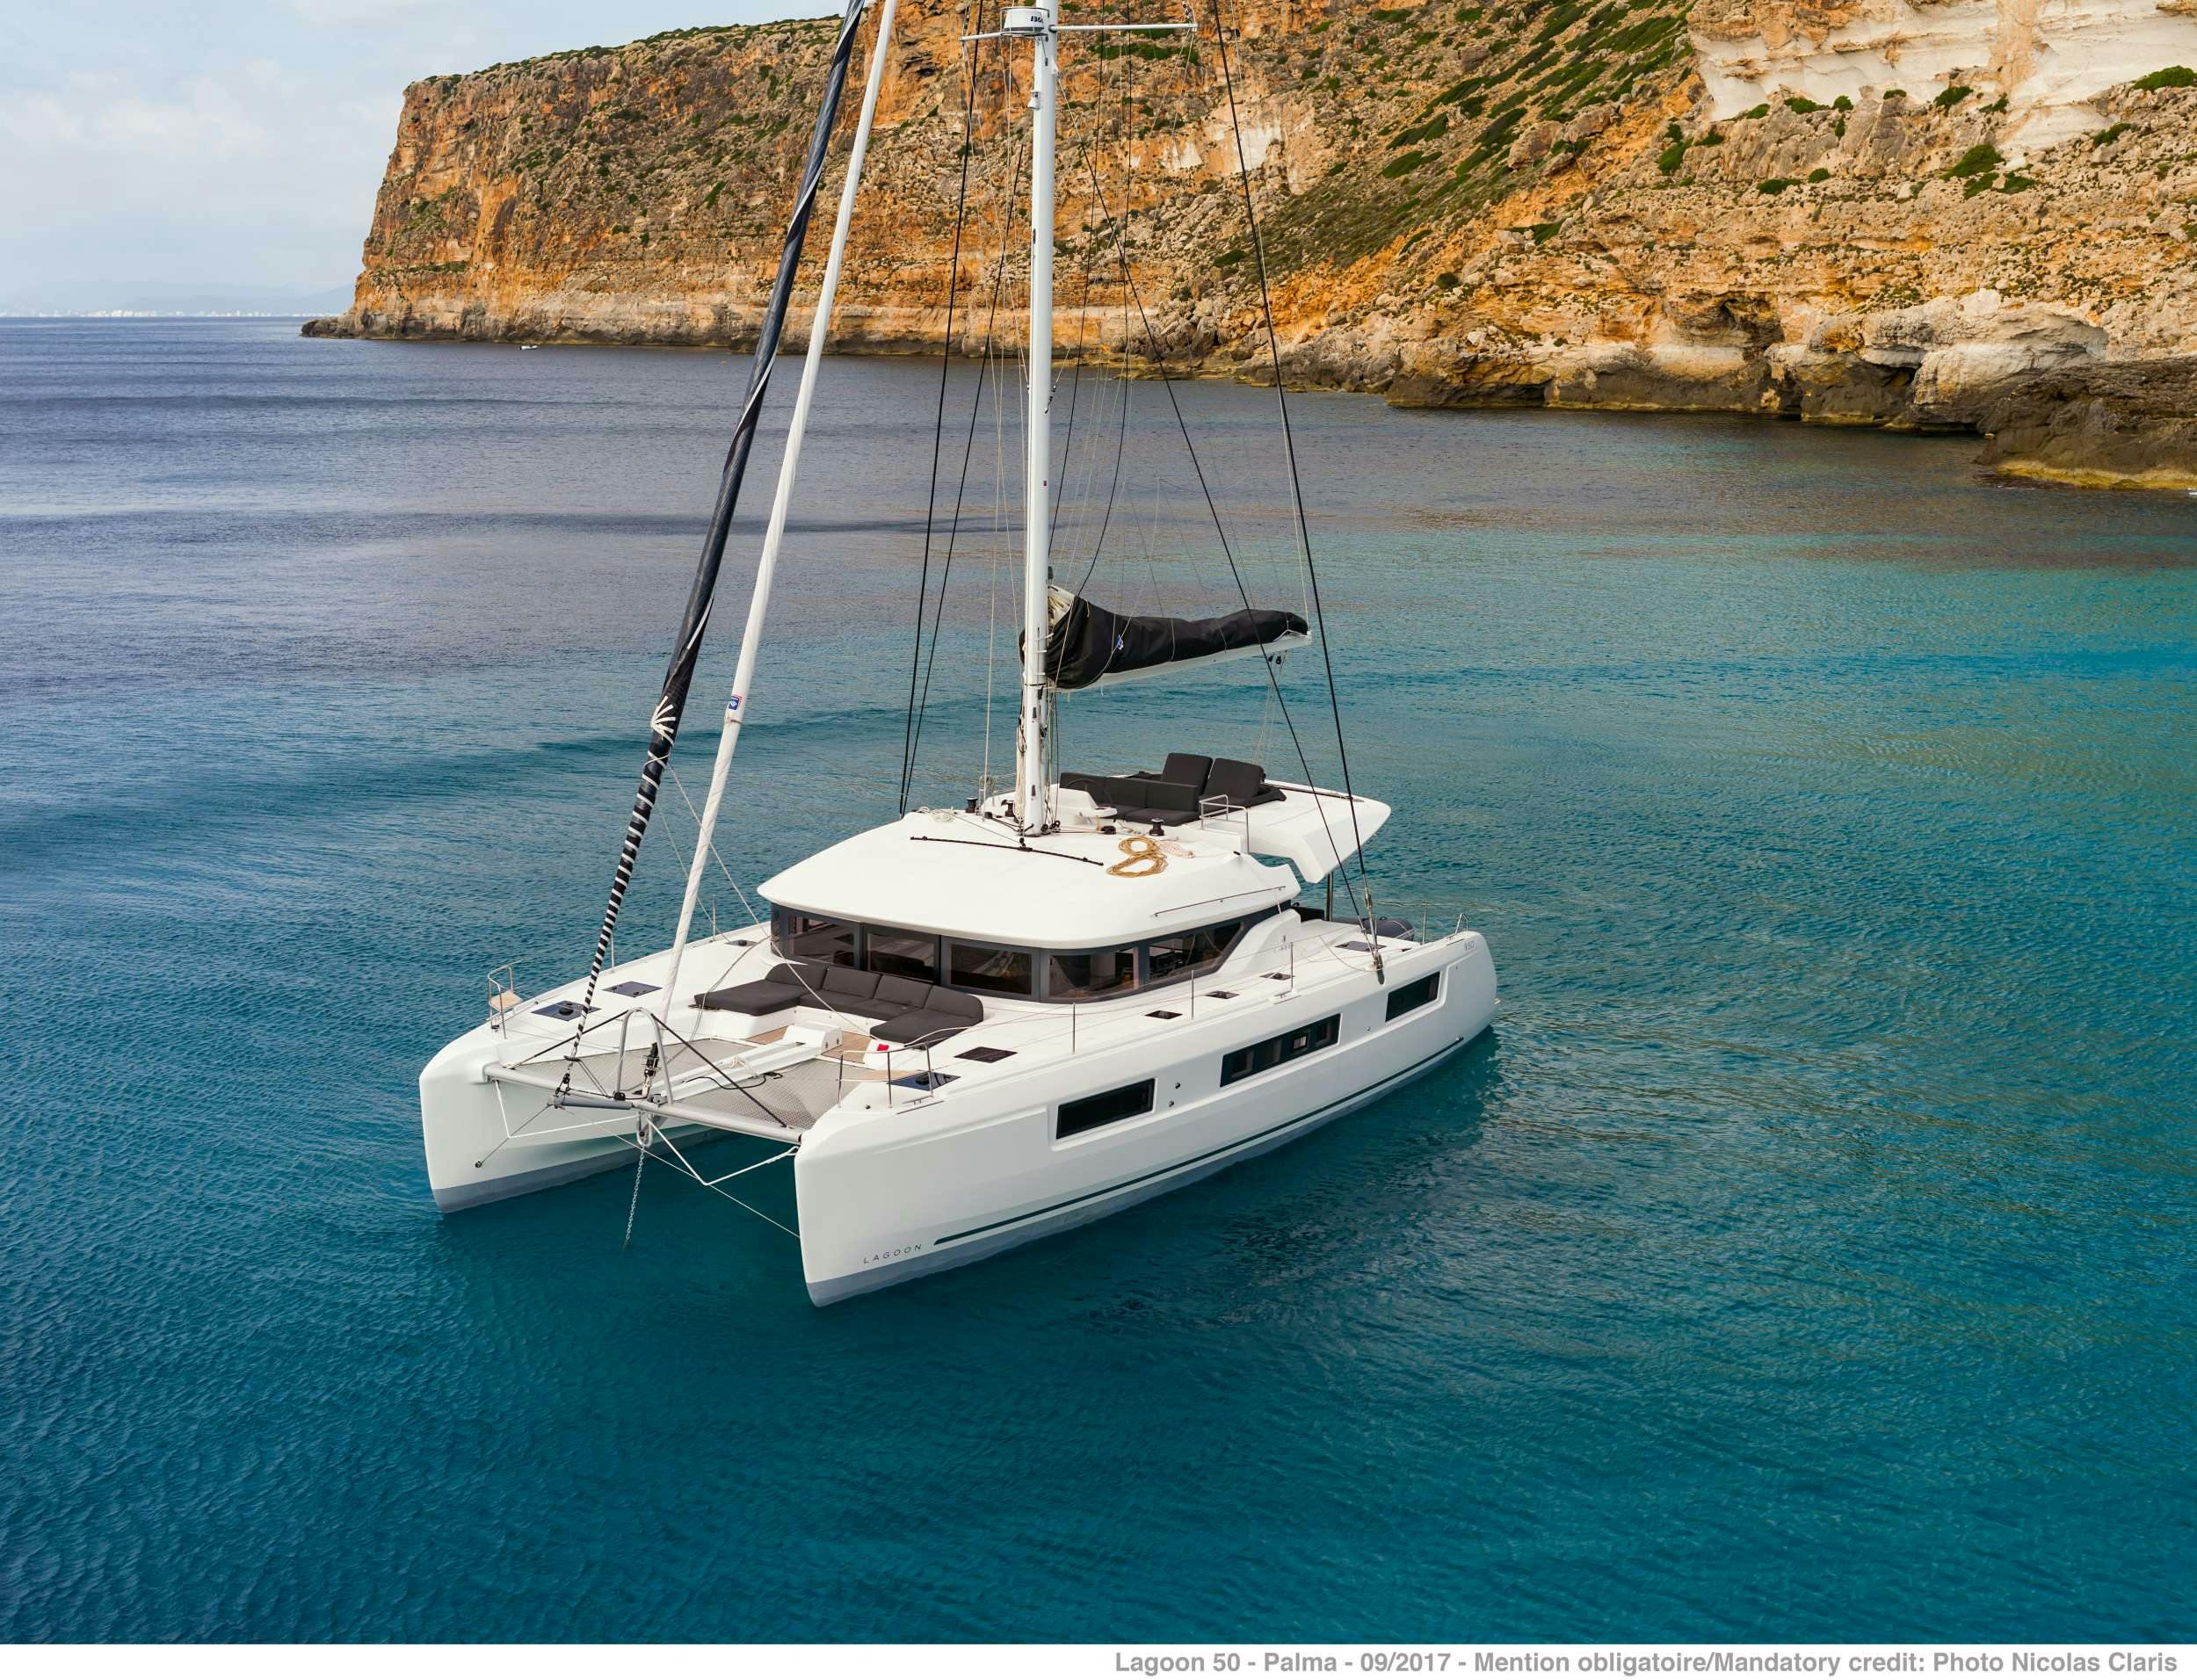 ONEIDA 2 - Yacht Charter St Katherine's Docks & Boat hire in Greece 1